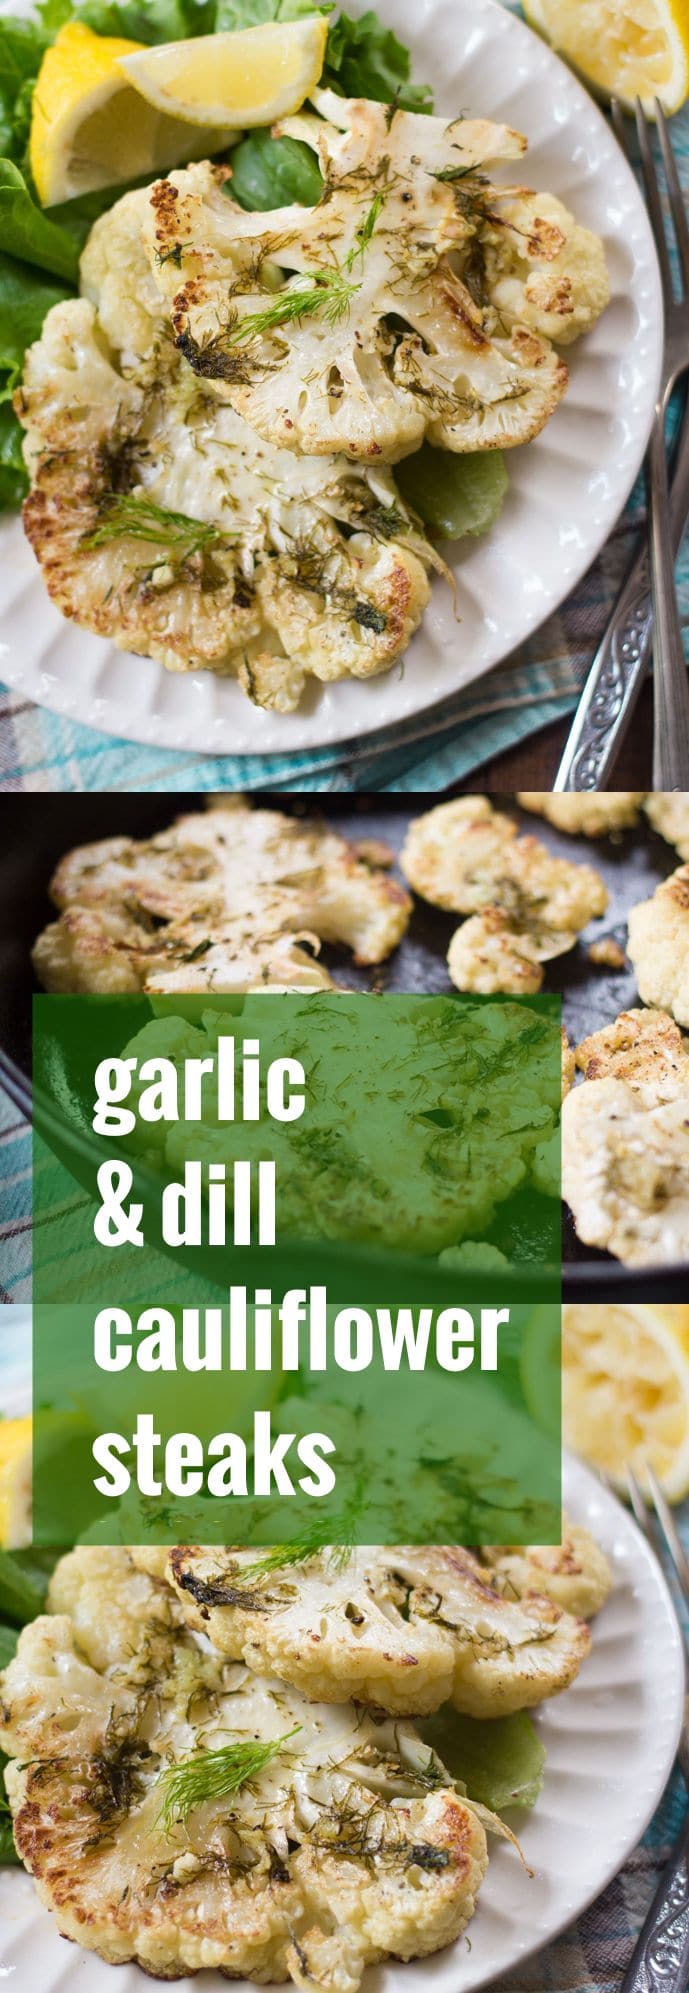 Garlic & Dill Cauliflower Steaks